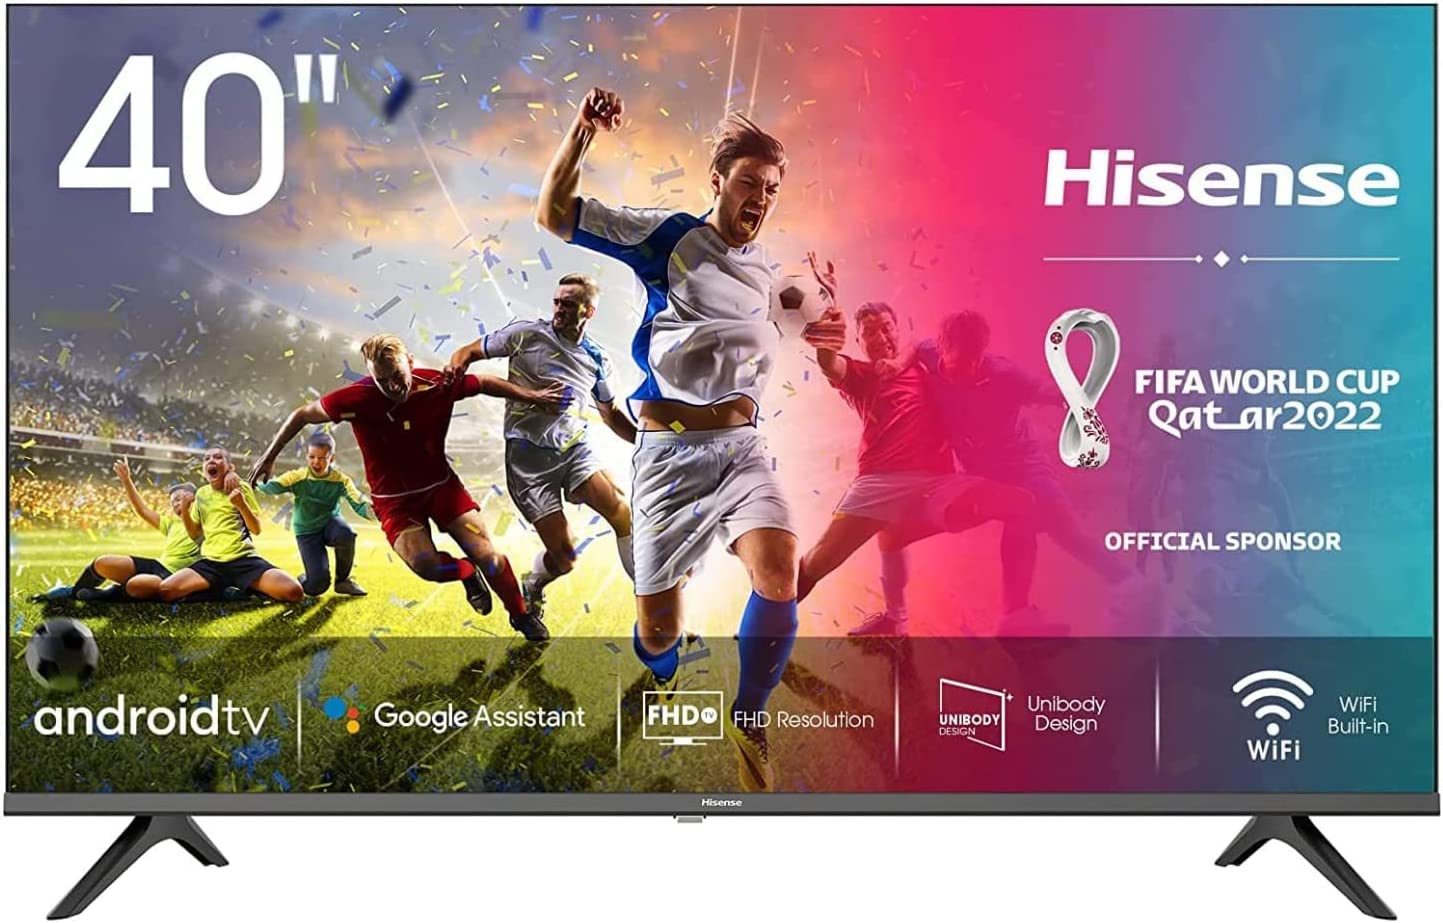 TV HISENSE 40" FULL HD SMART ANDROID DVB/T2/S2 40A5700FA